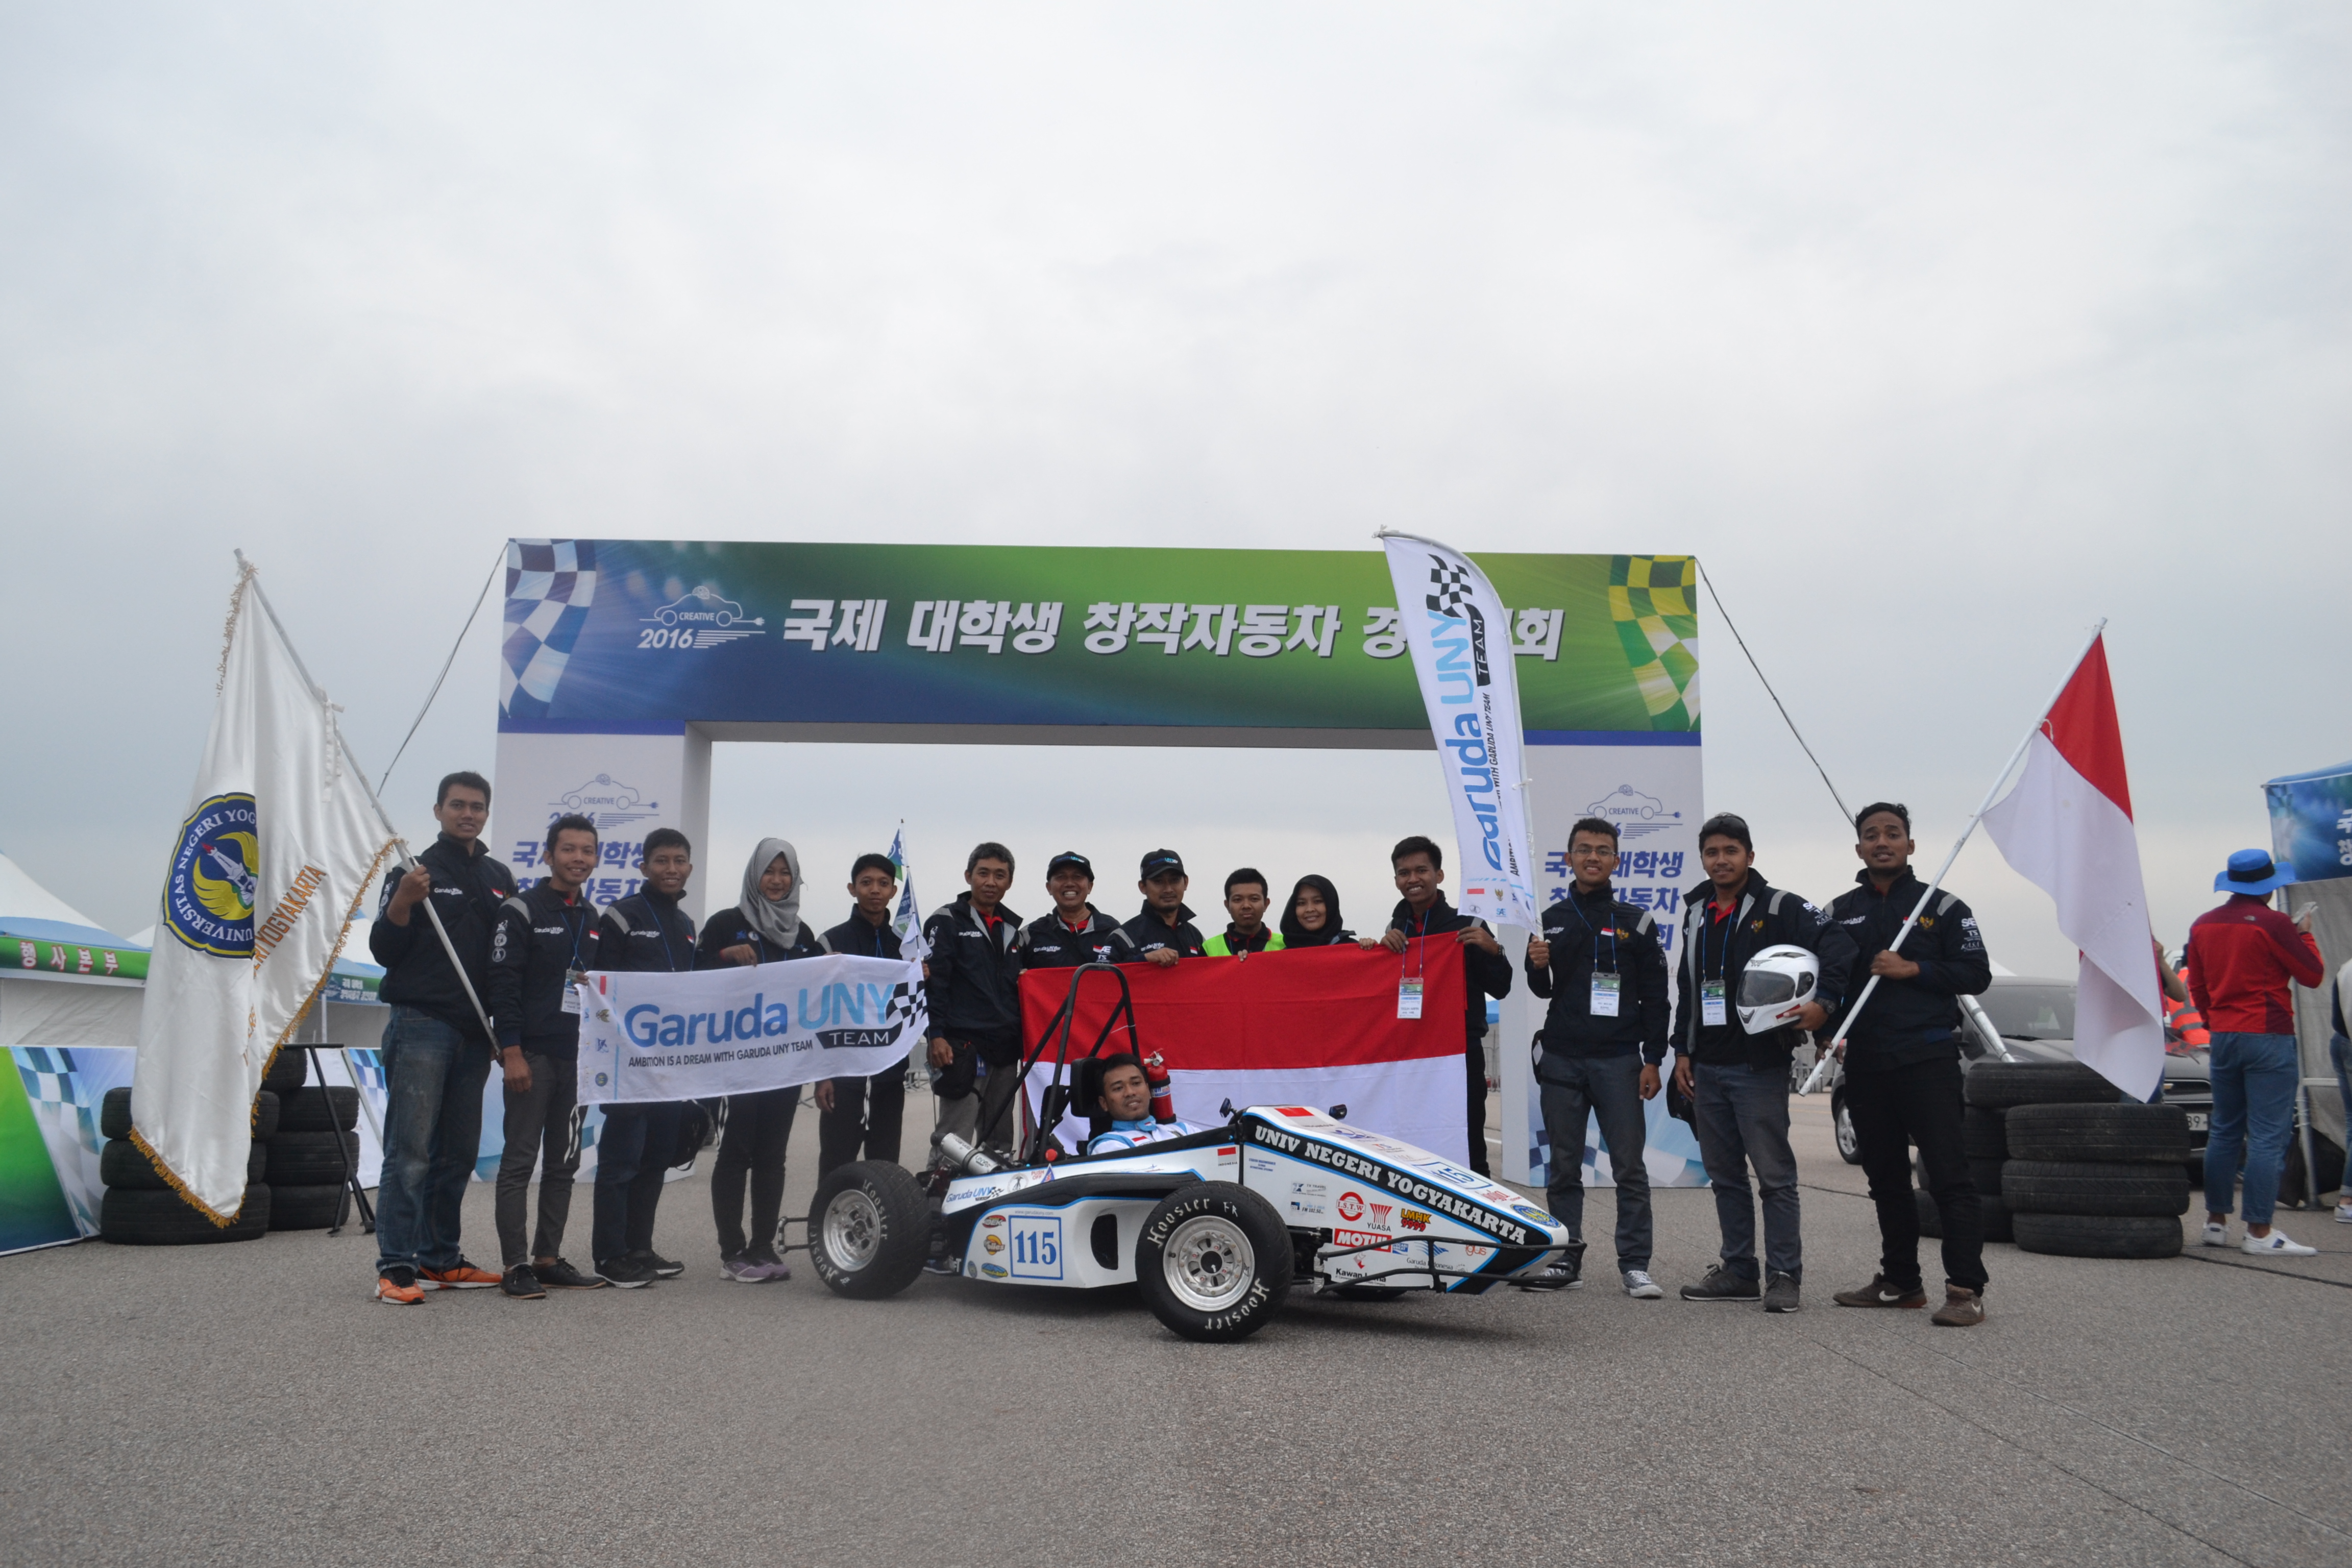 Foto 2016 International Student Car Competition kategori Endurance